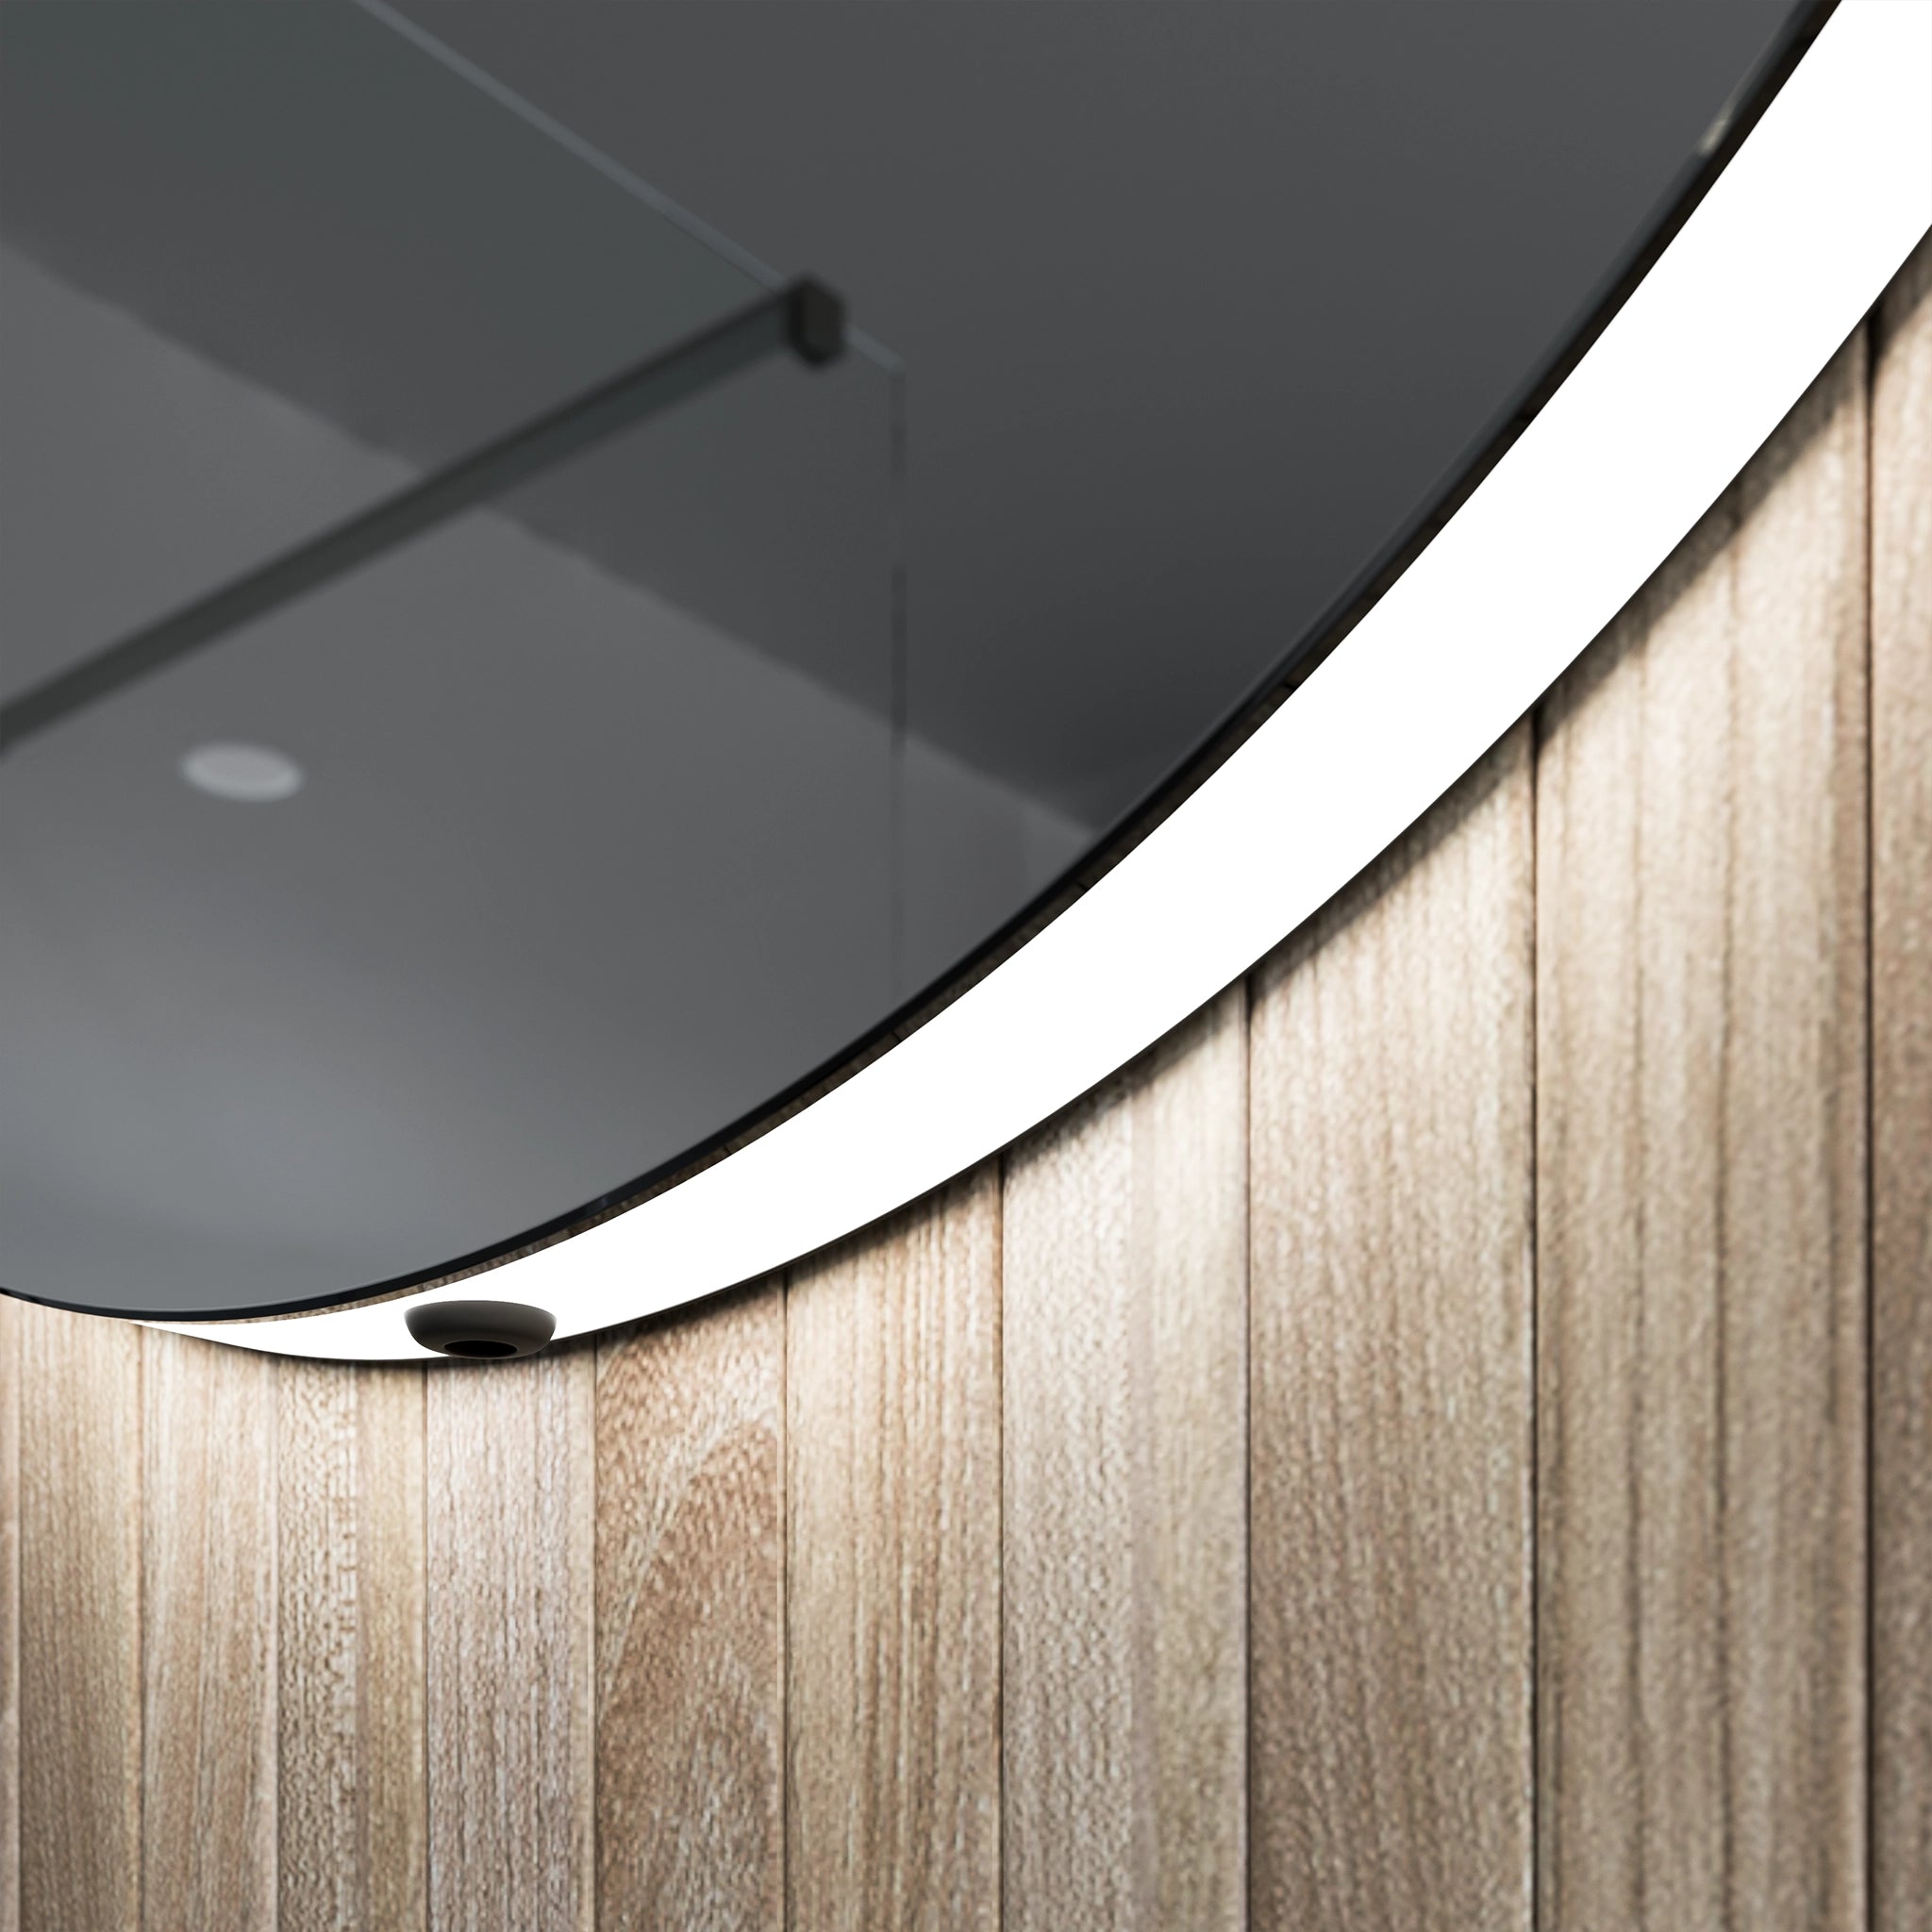 Halo Round LED Bathroom Mirror #size_800mm